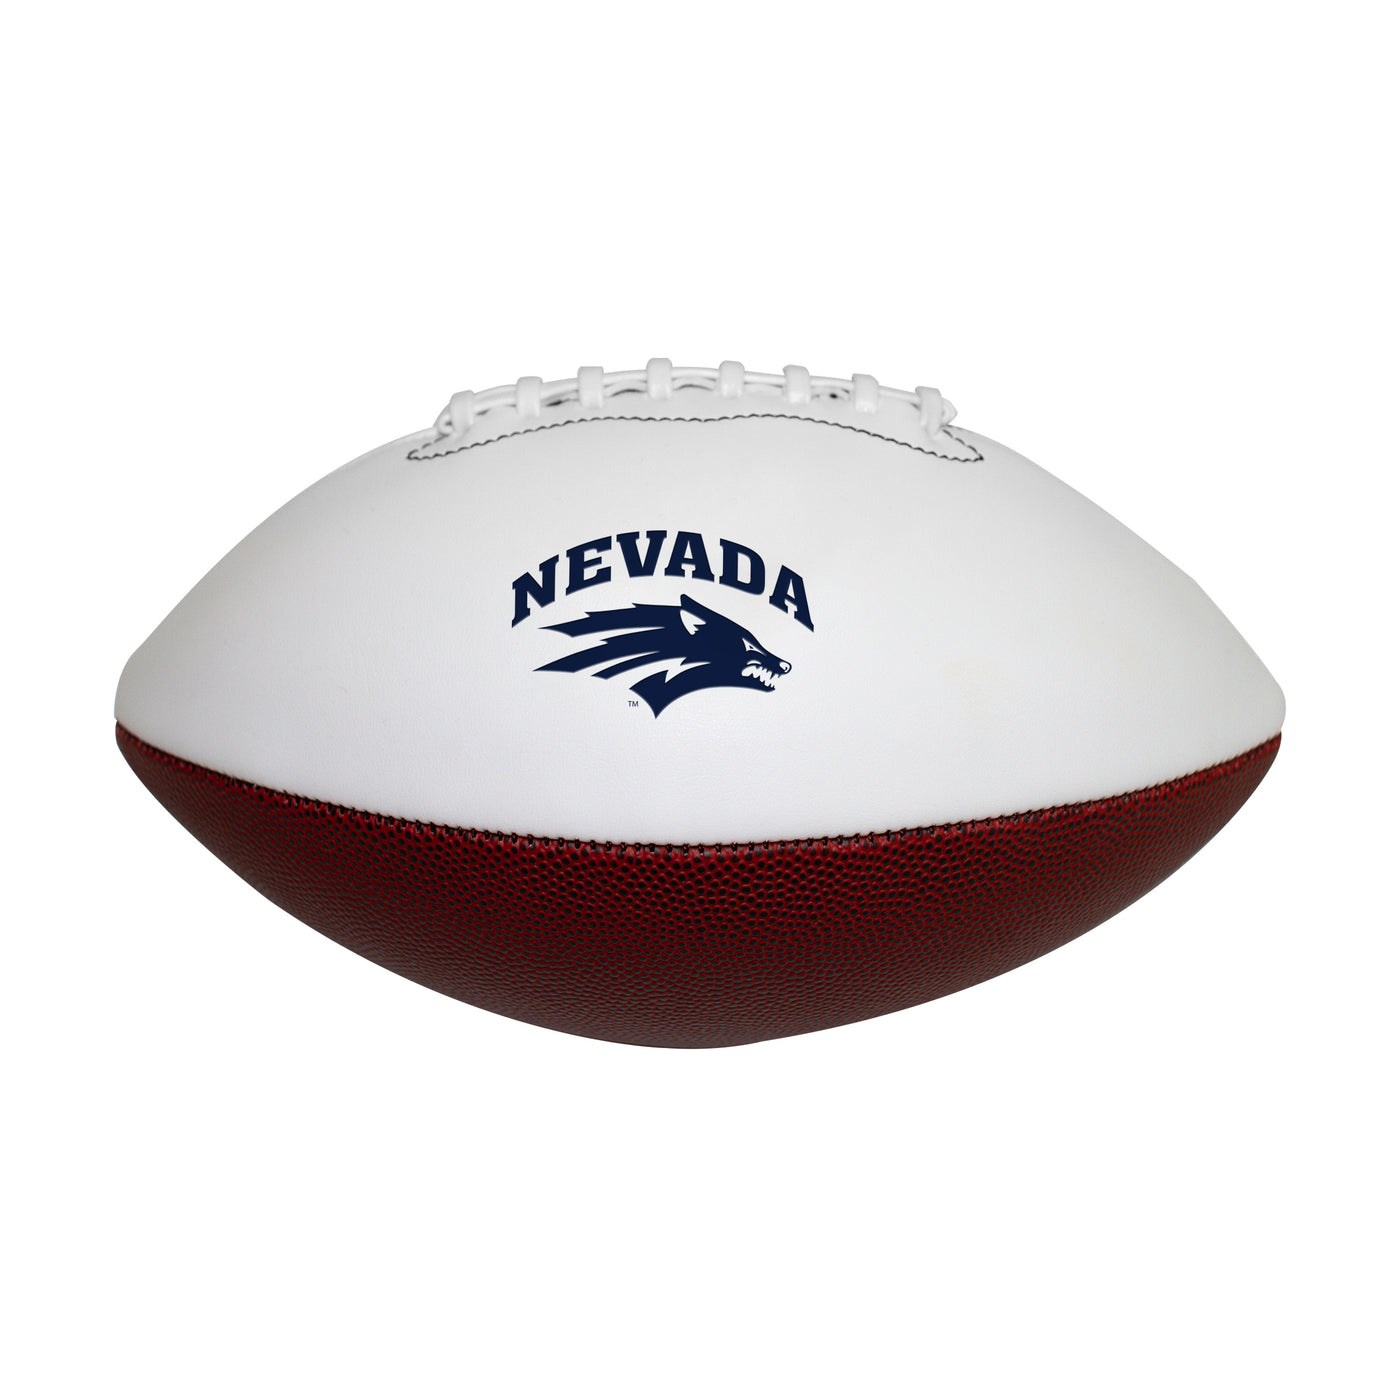 Nevada (Reno) Official-Size Autograph Football